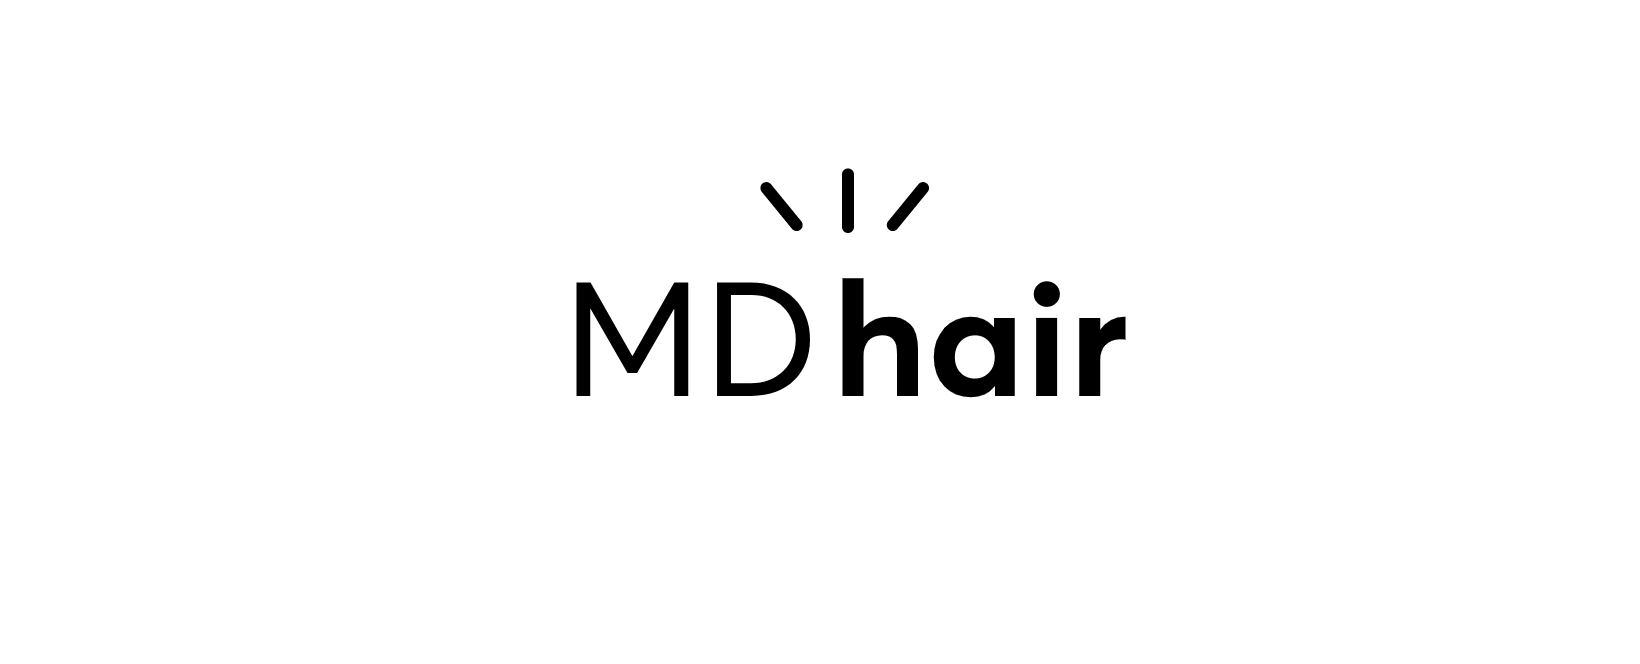 MDhair Discount Code 2022